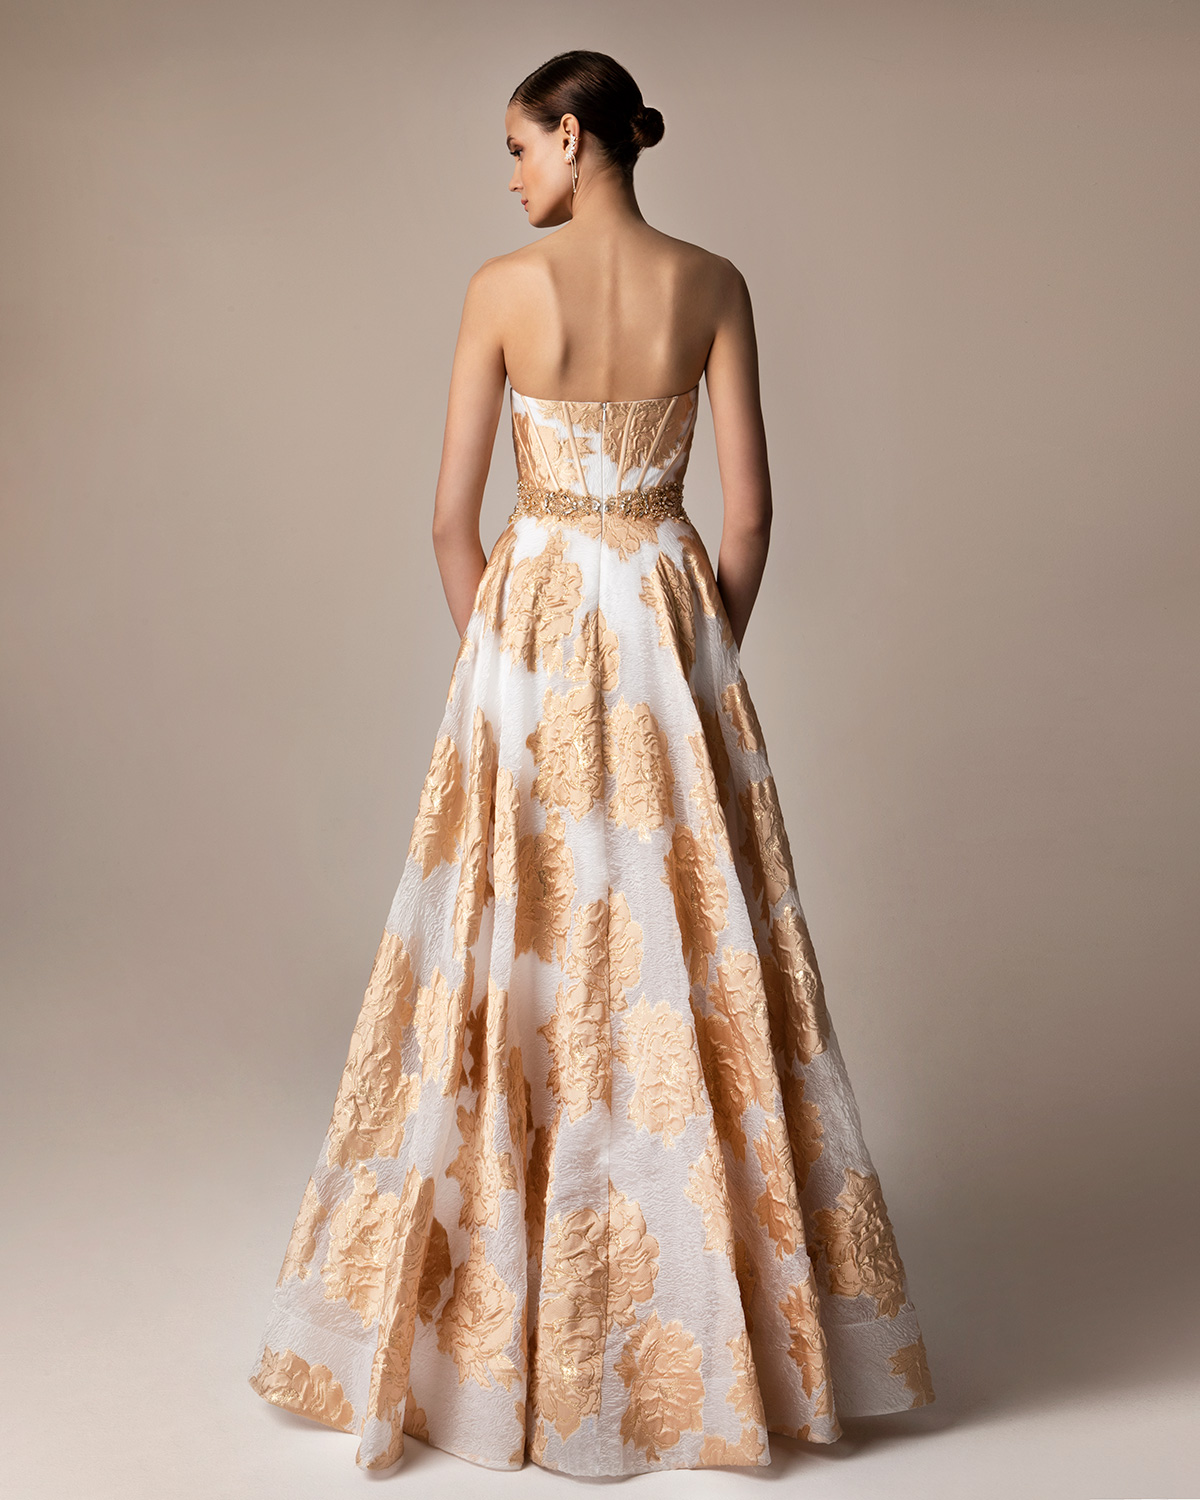 Long evening printed brocade dress with beading around the waist